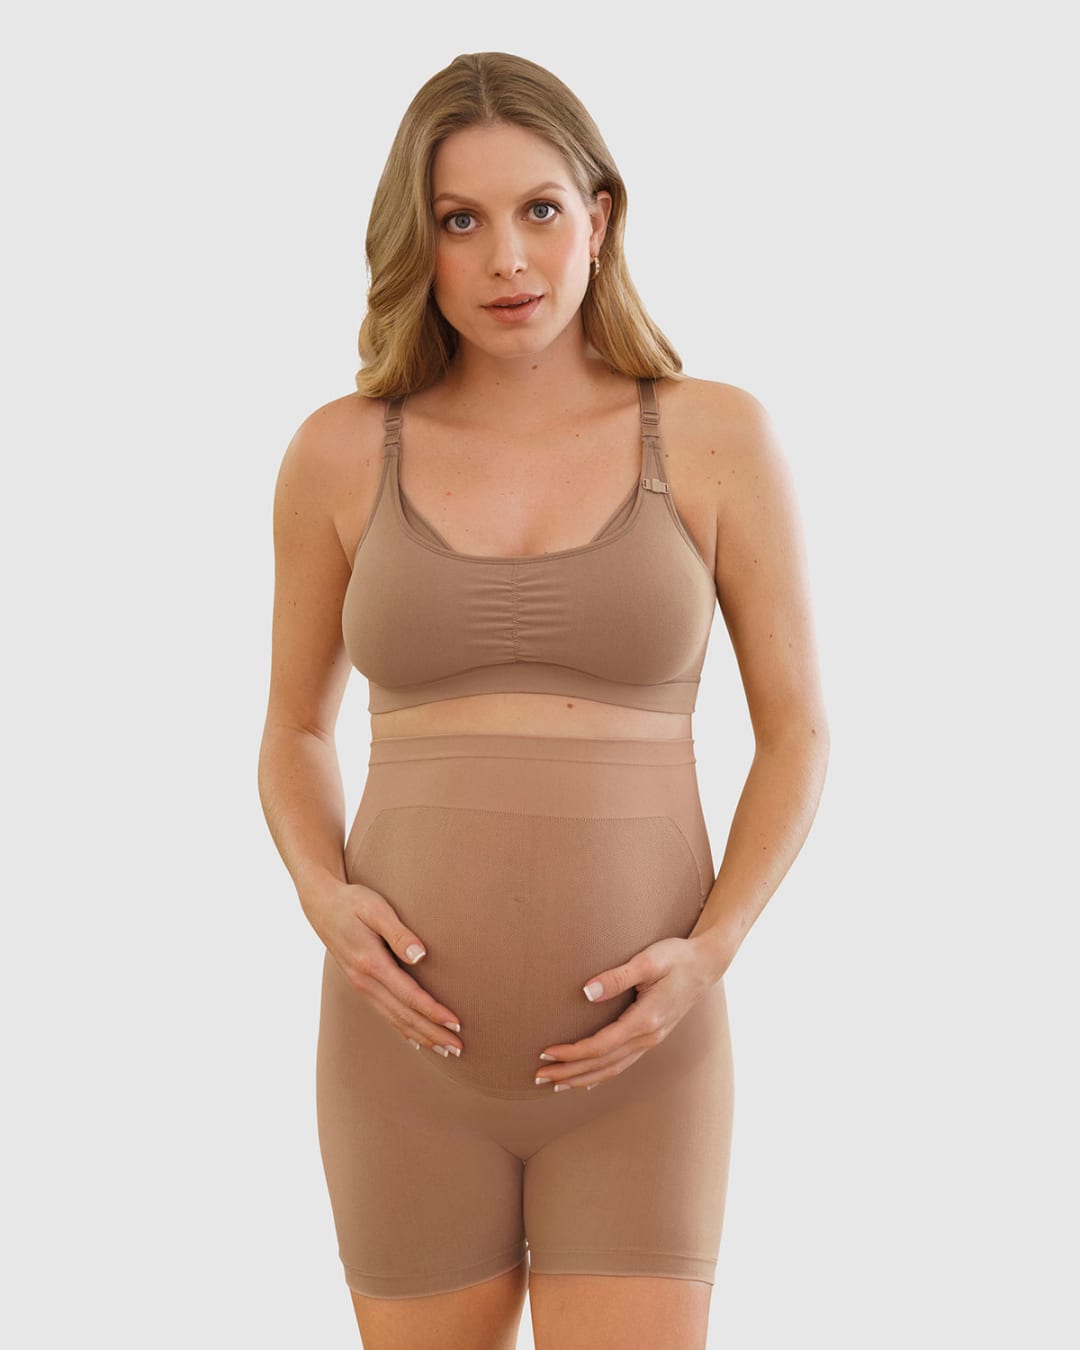 Buy Mama Maternity Spanx Full Length in Canada at